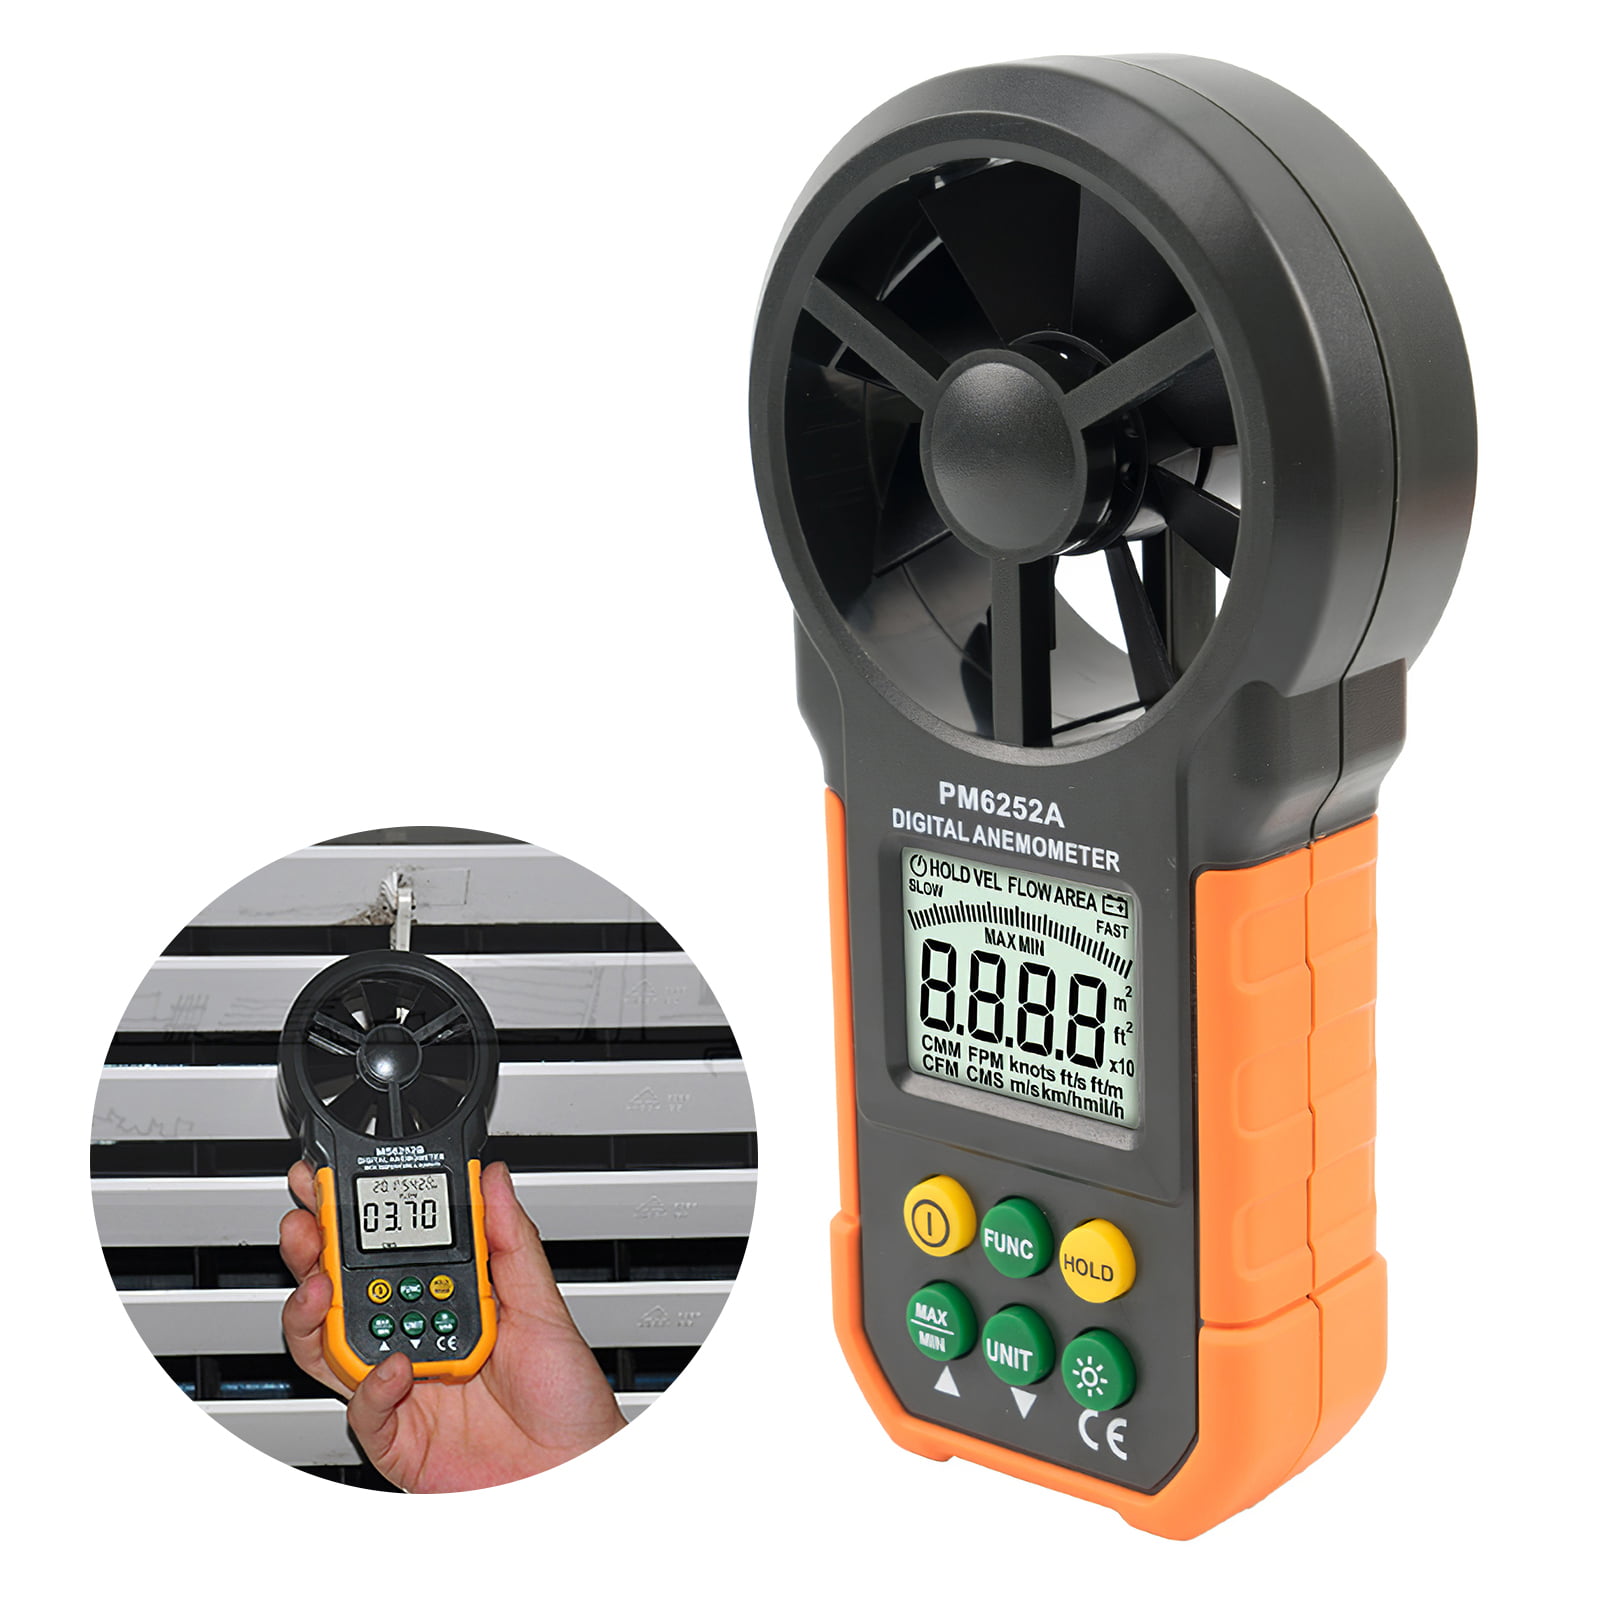 Portable Digital Anemometer Wind Air Speed Airflow Gauge Meter Tester PM6252A